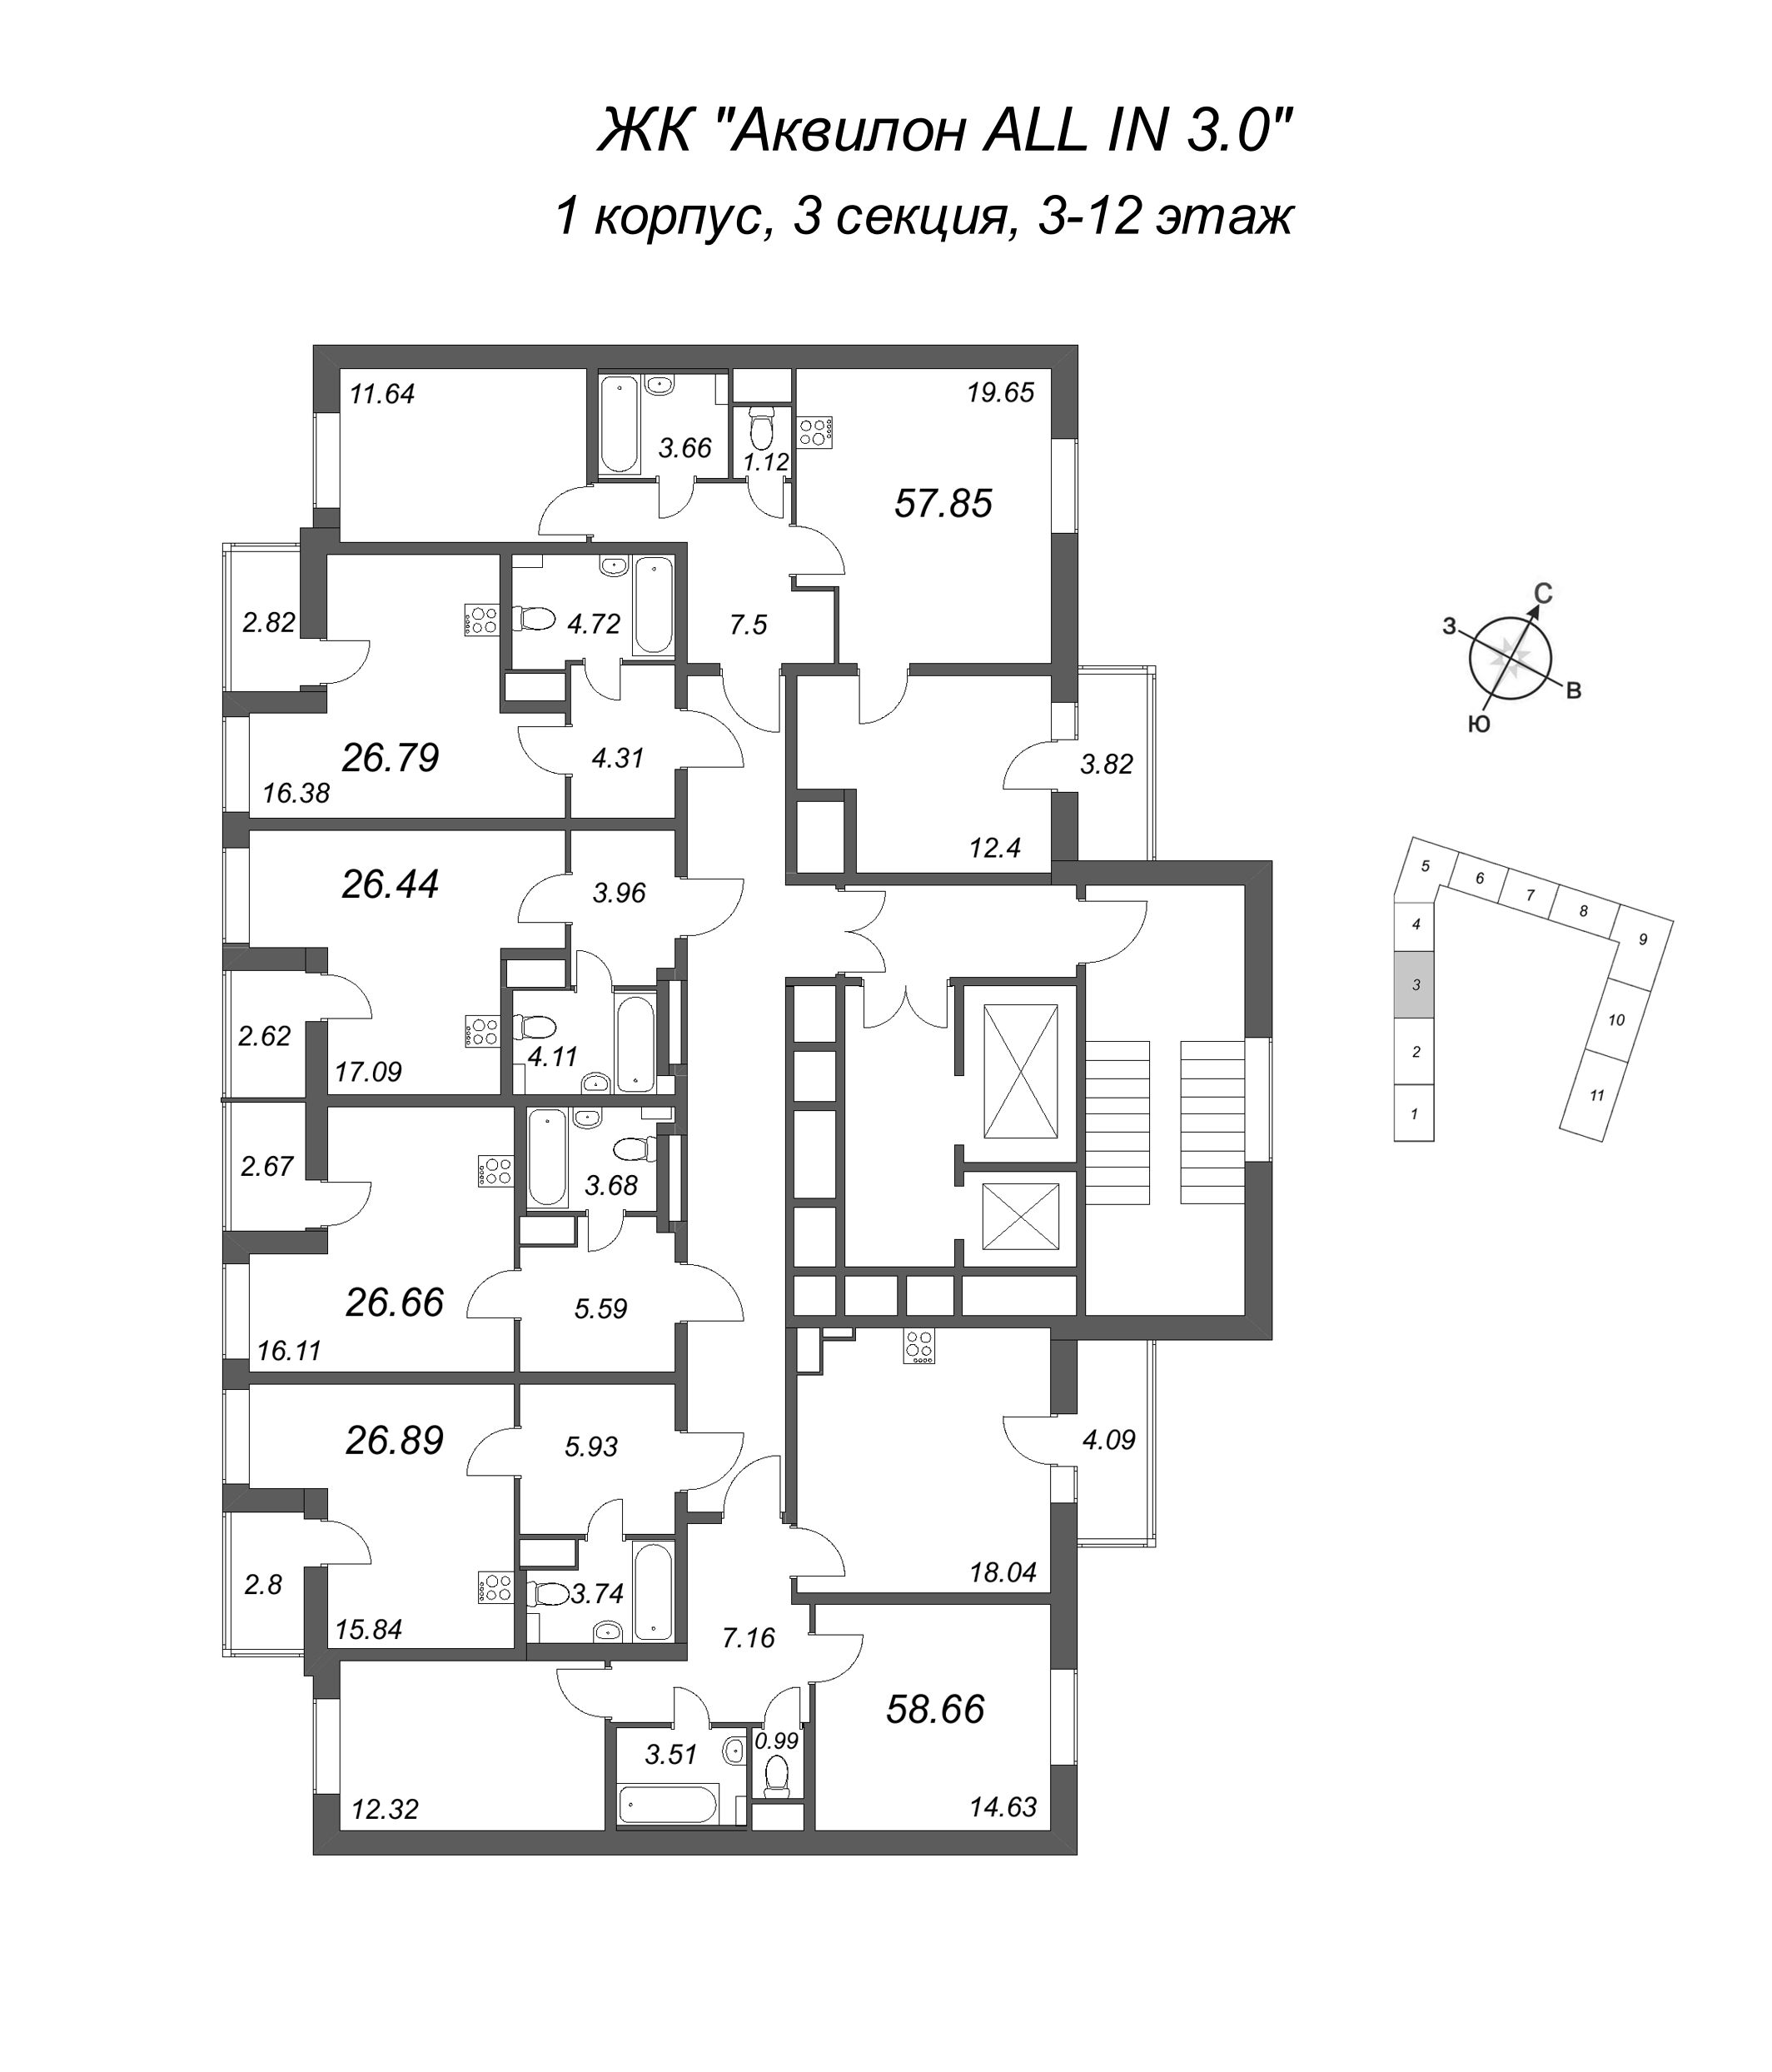 3-комнатная (Евро) квартира, 58.66 м² - планировка этажа